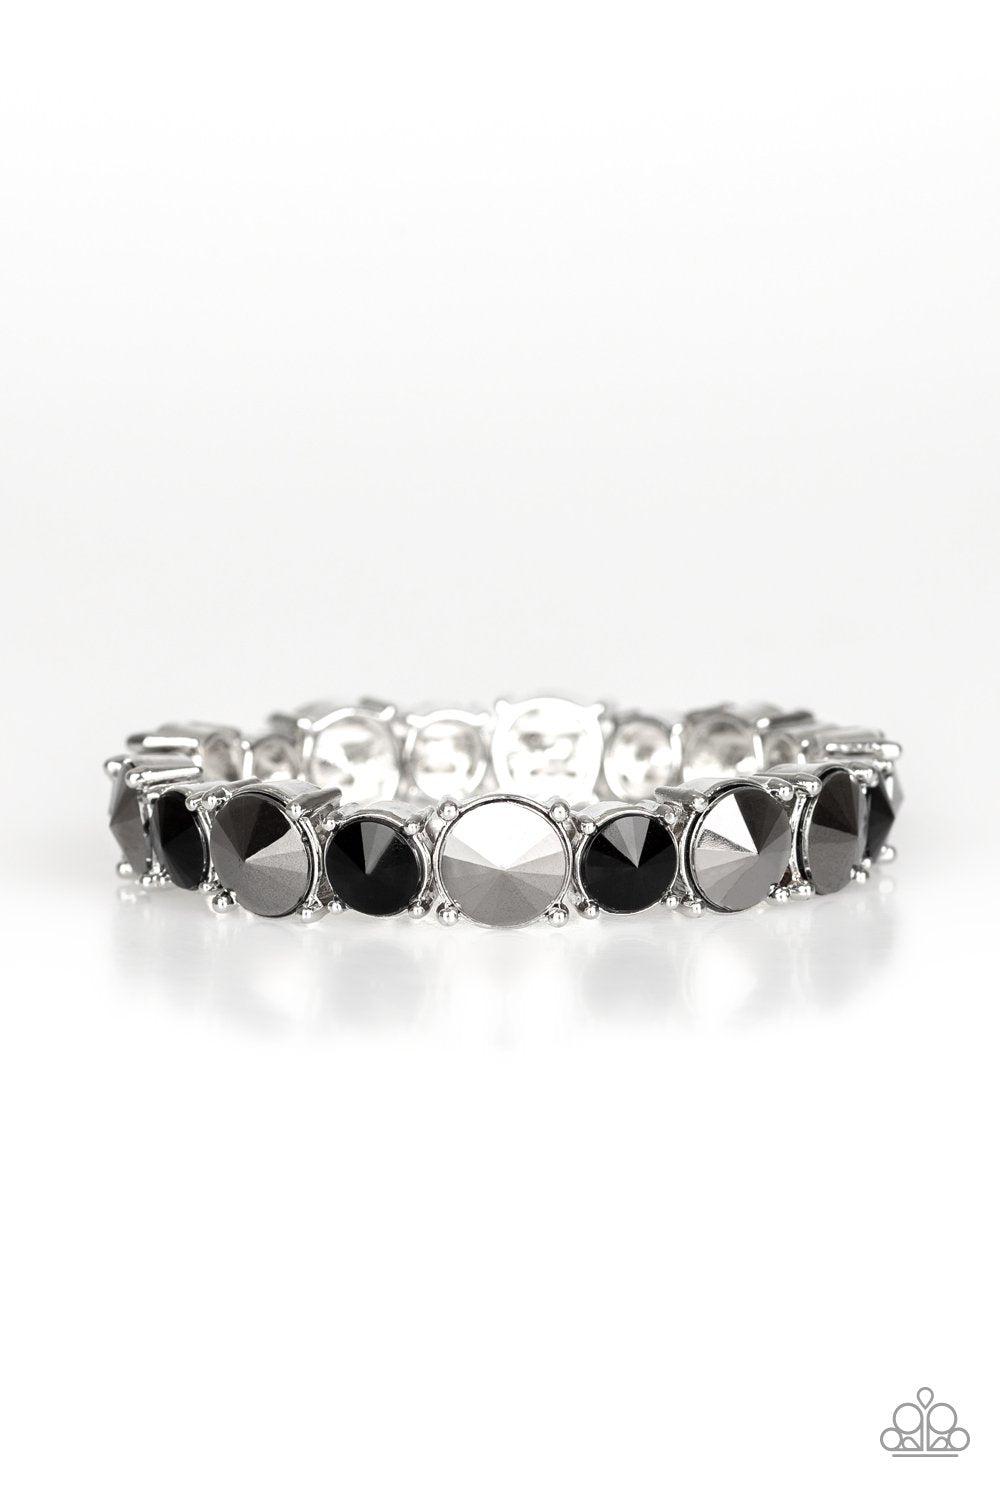 Born to Bedazzle Multi - Black and Hematite Rhinestone Bracelet - Paparazzi Accessories-CarasShop.com - $5 Jewelry by Cara Jewels